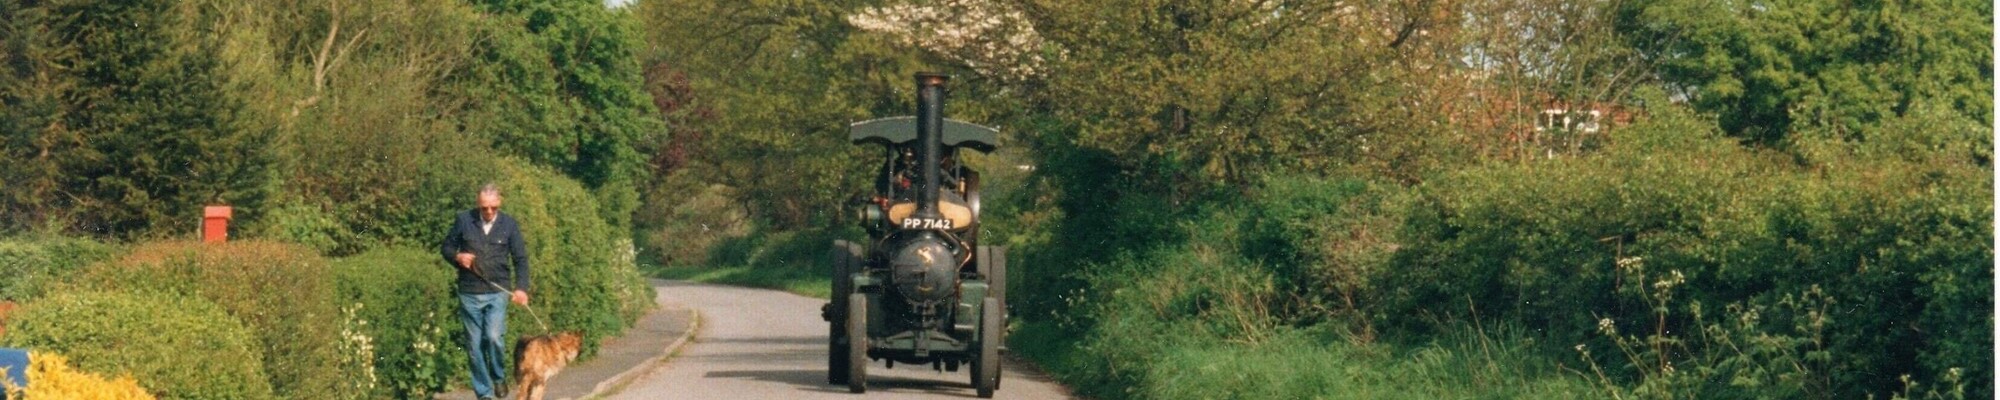 96 Year Old Steam Tractor Uncovered In Suffolk Garden.